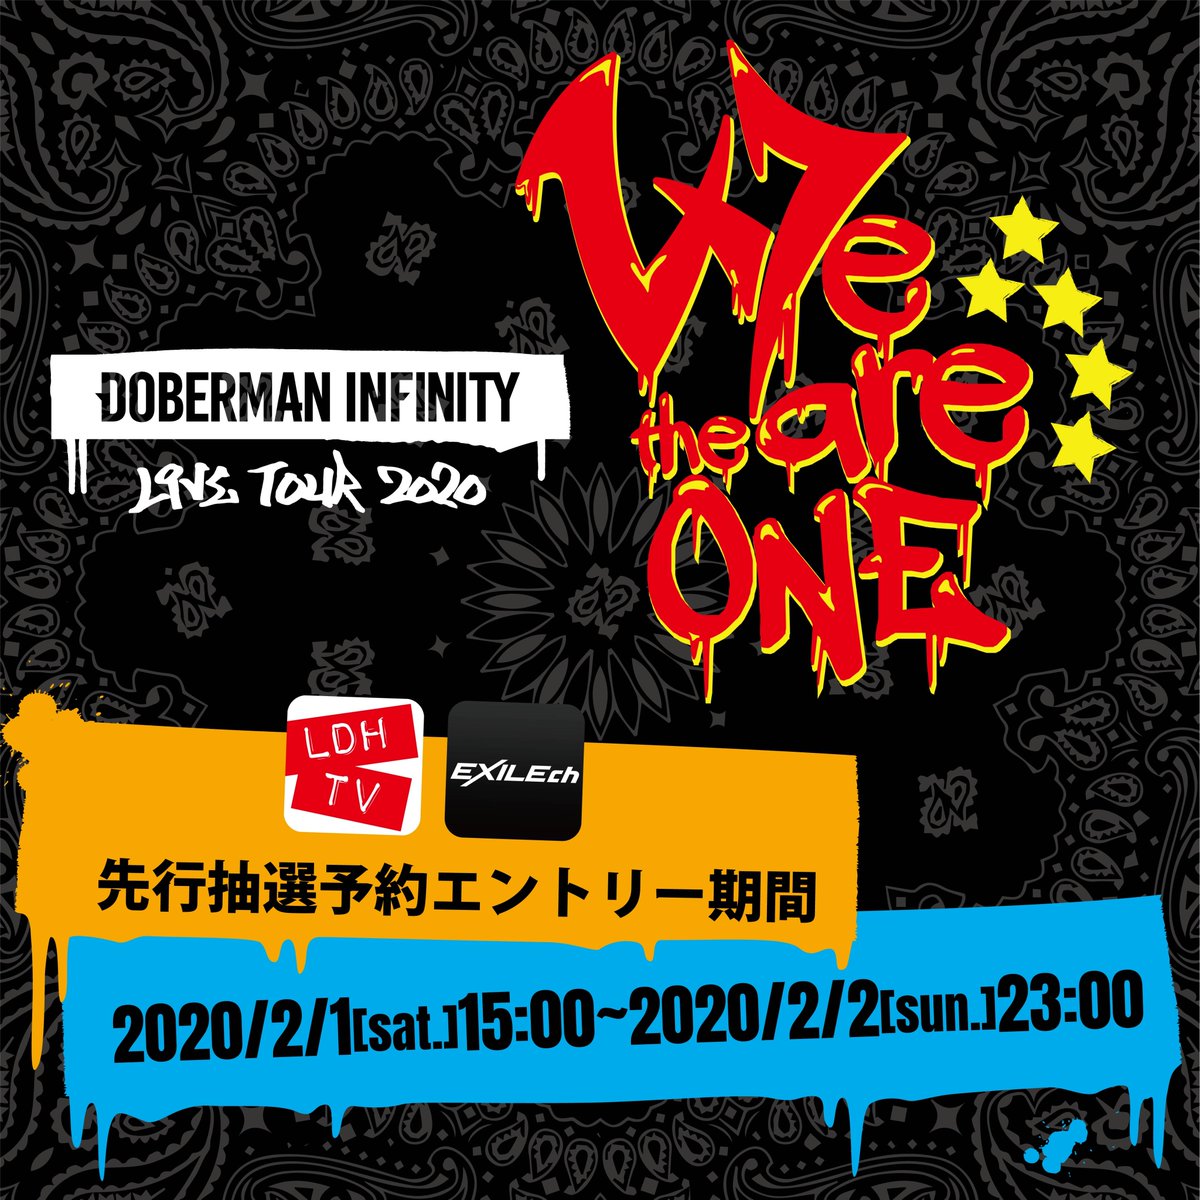 Cl 公式 Ldh Tv会員限定 Doberman Infinity Live Tour We Are The One 追加公演 Ldh Tvチケット先行抽選予約は2月1日 土 15 00からエントリースタート エントリー期間 2 1 土 15 00 2 2 日 23 00 対象者 エントリー期間内に